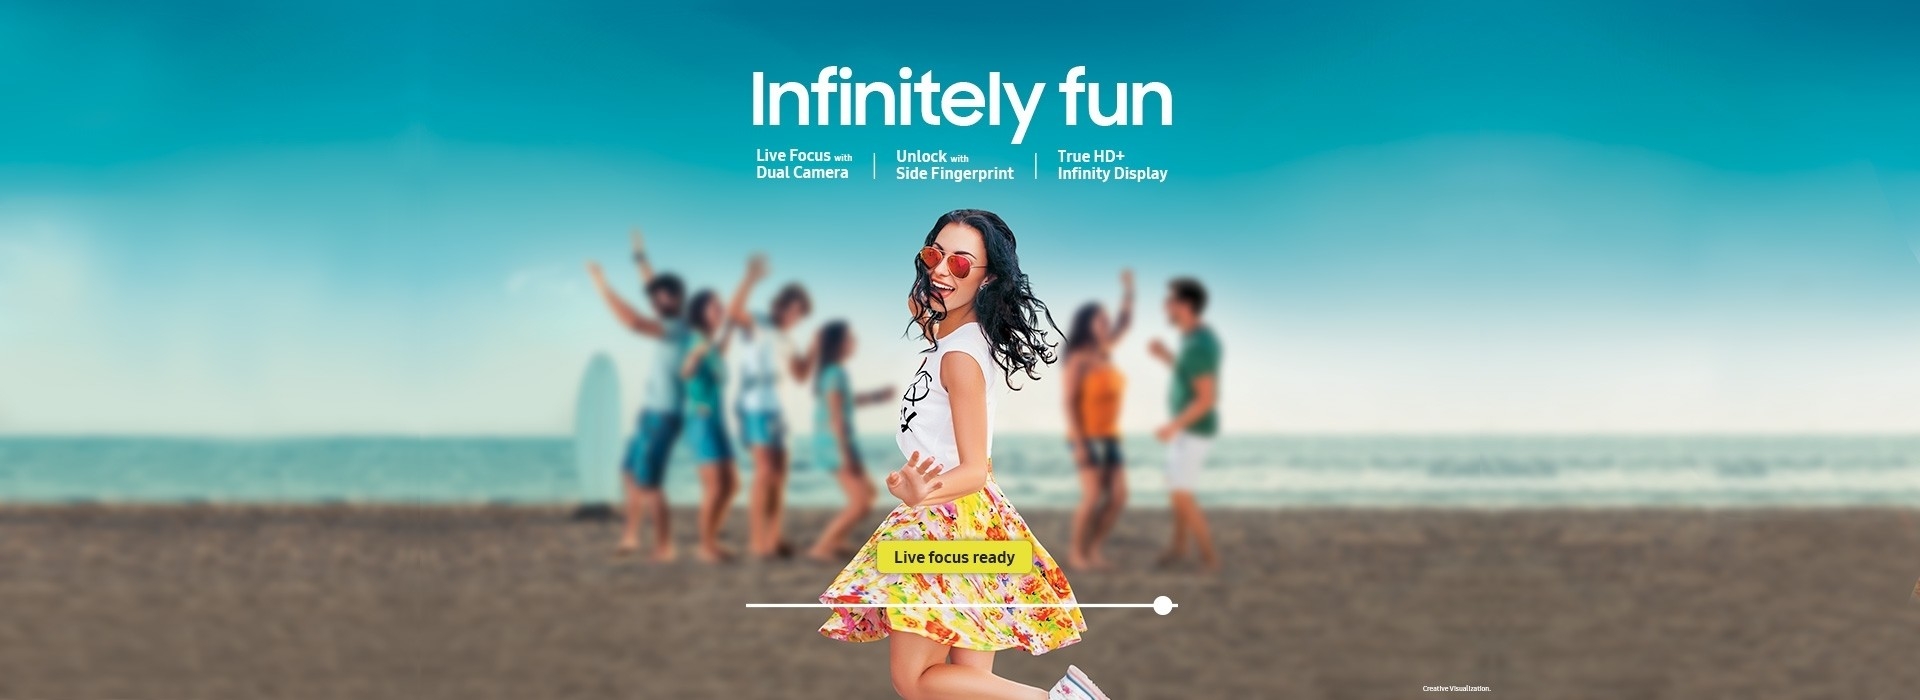 Infinitely Fun - Samsung Galaxy J6+